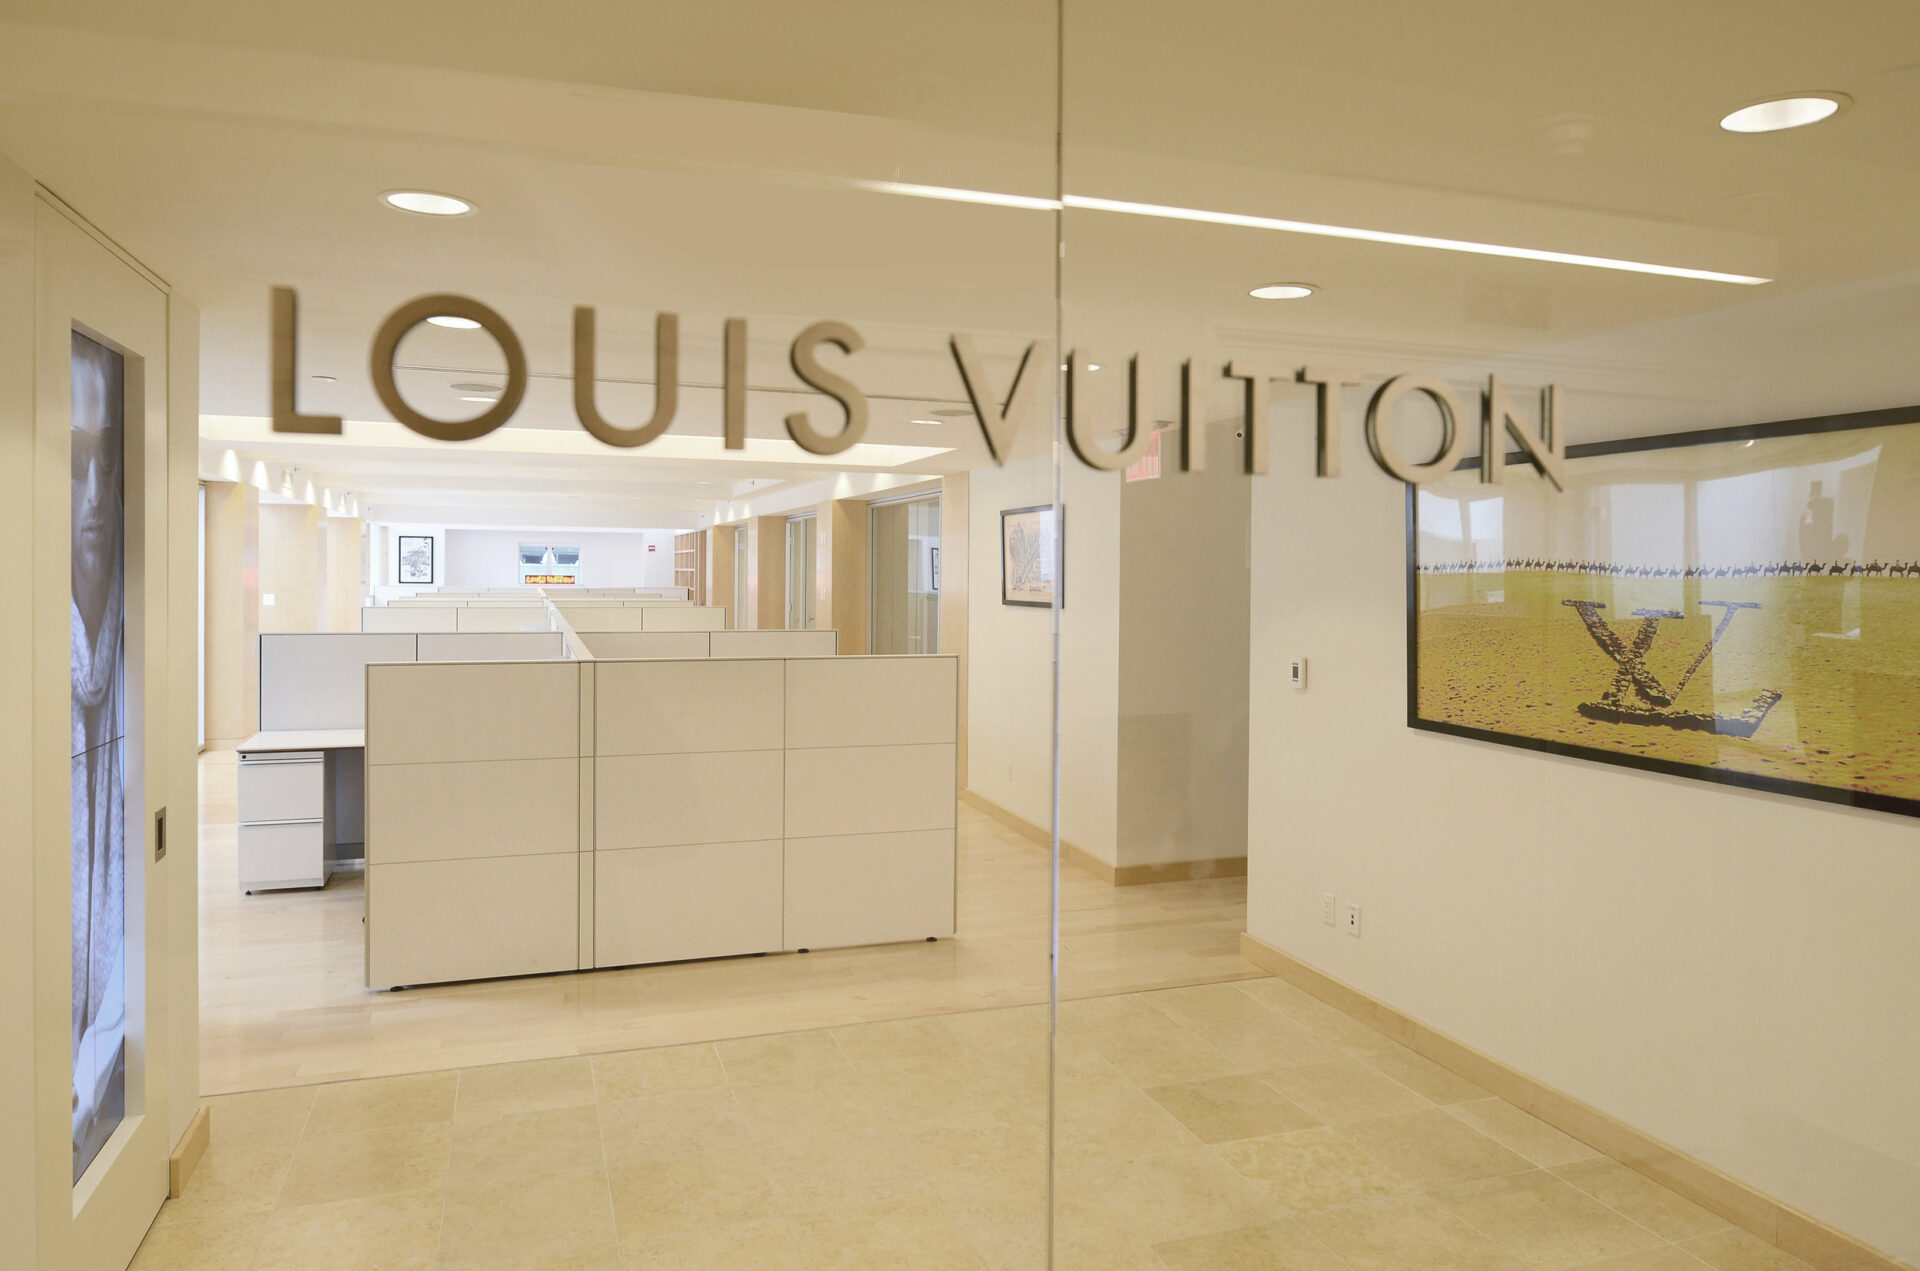 Louis Vuitton, East 57th Street, Manhattan, New York, NY